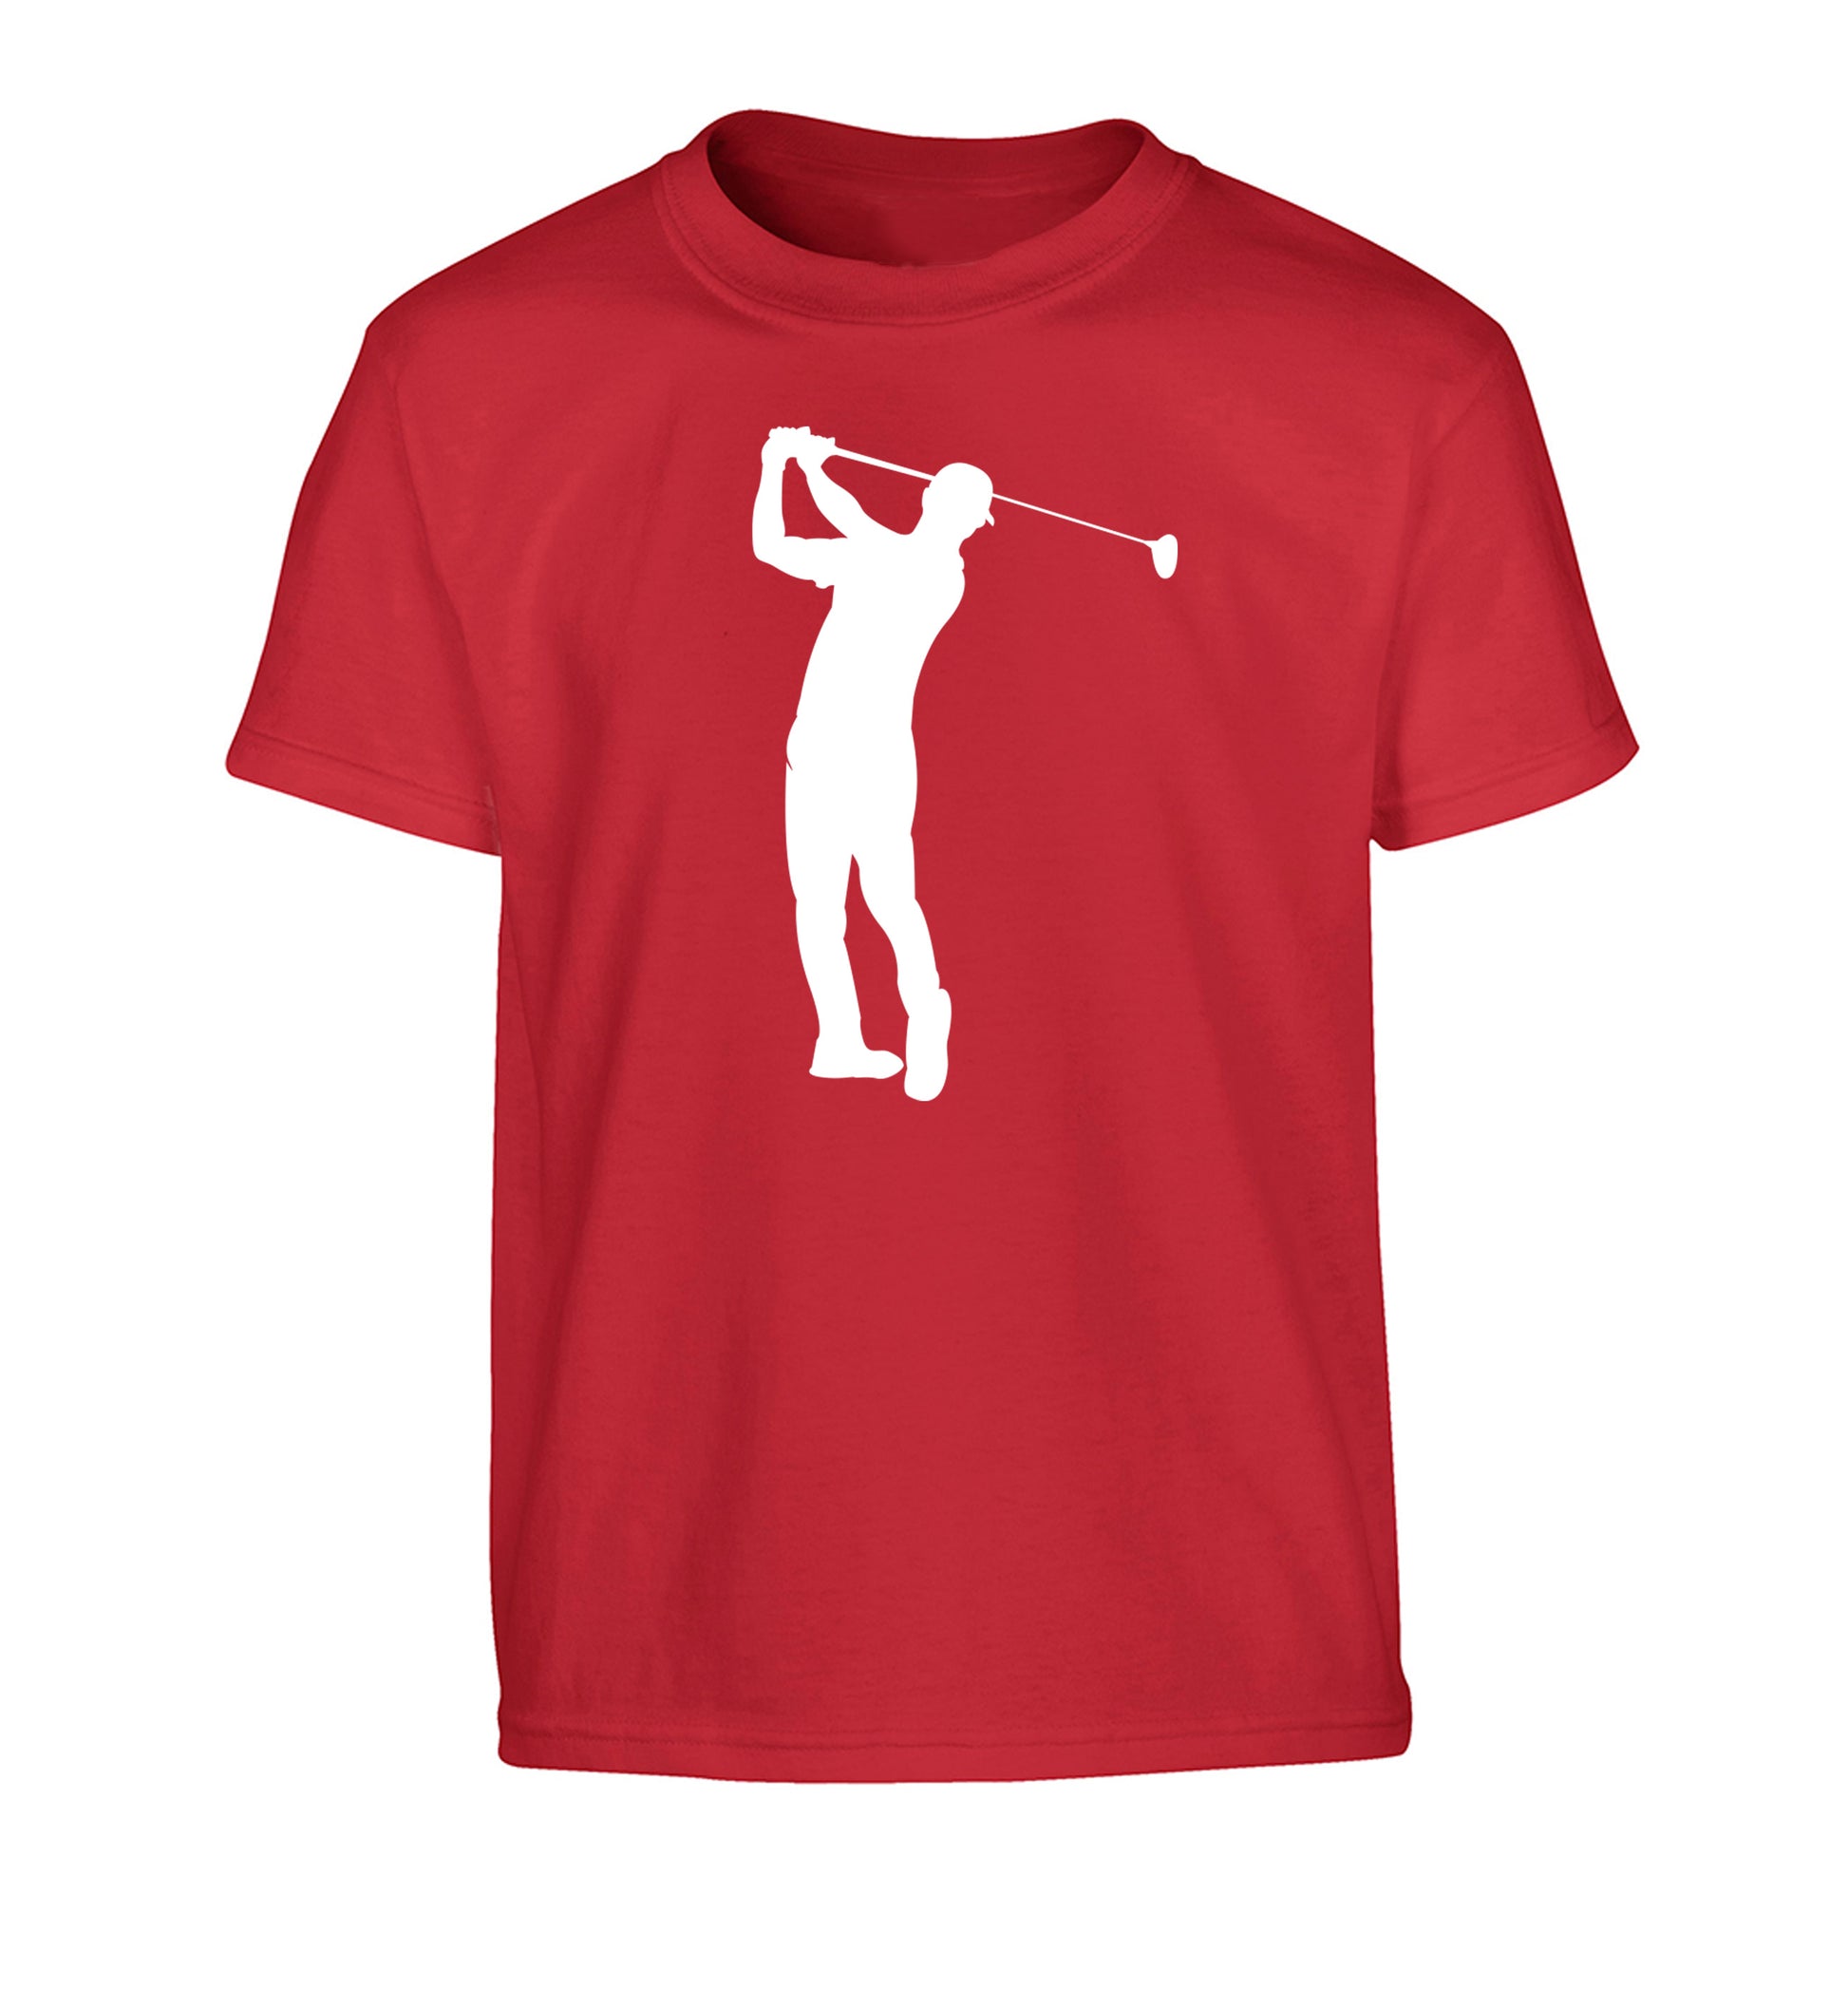 Golfer Illustration Children's red Tshirt 12-13 Years